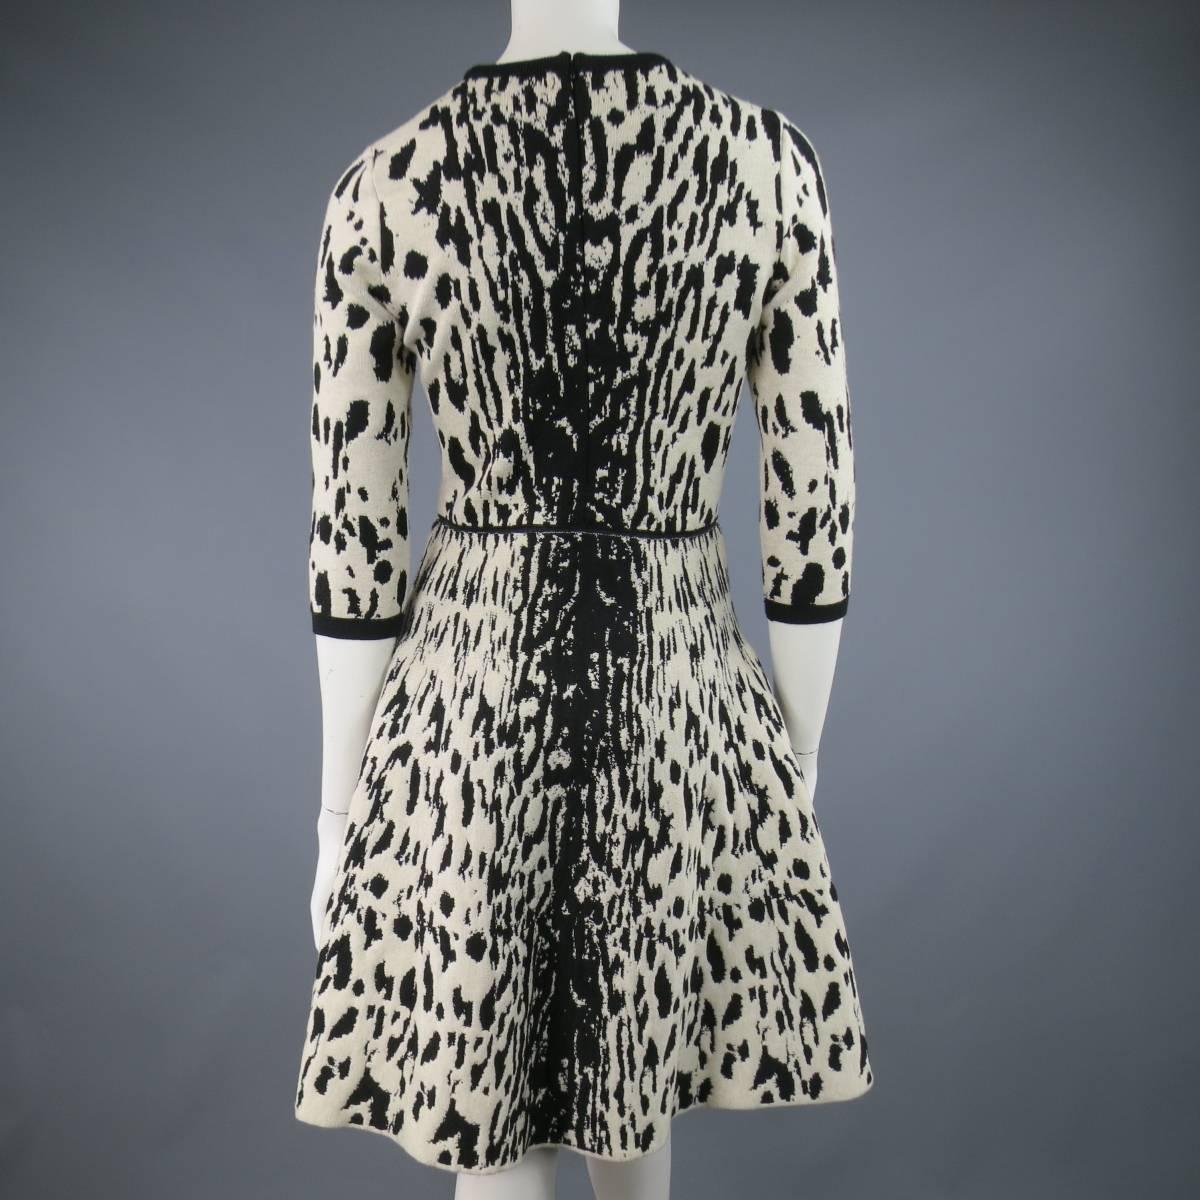 Lanvin Beige and Black Cheetah Wool Blend Stretch Knit Flare Skirt Dress Size M 2